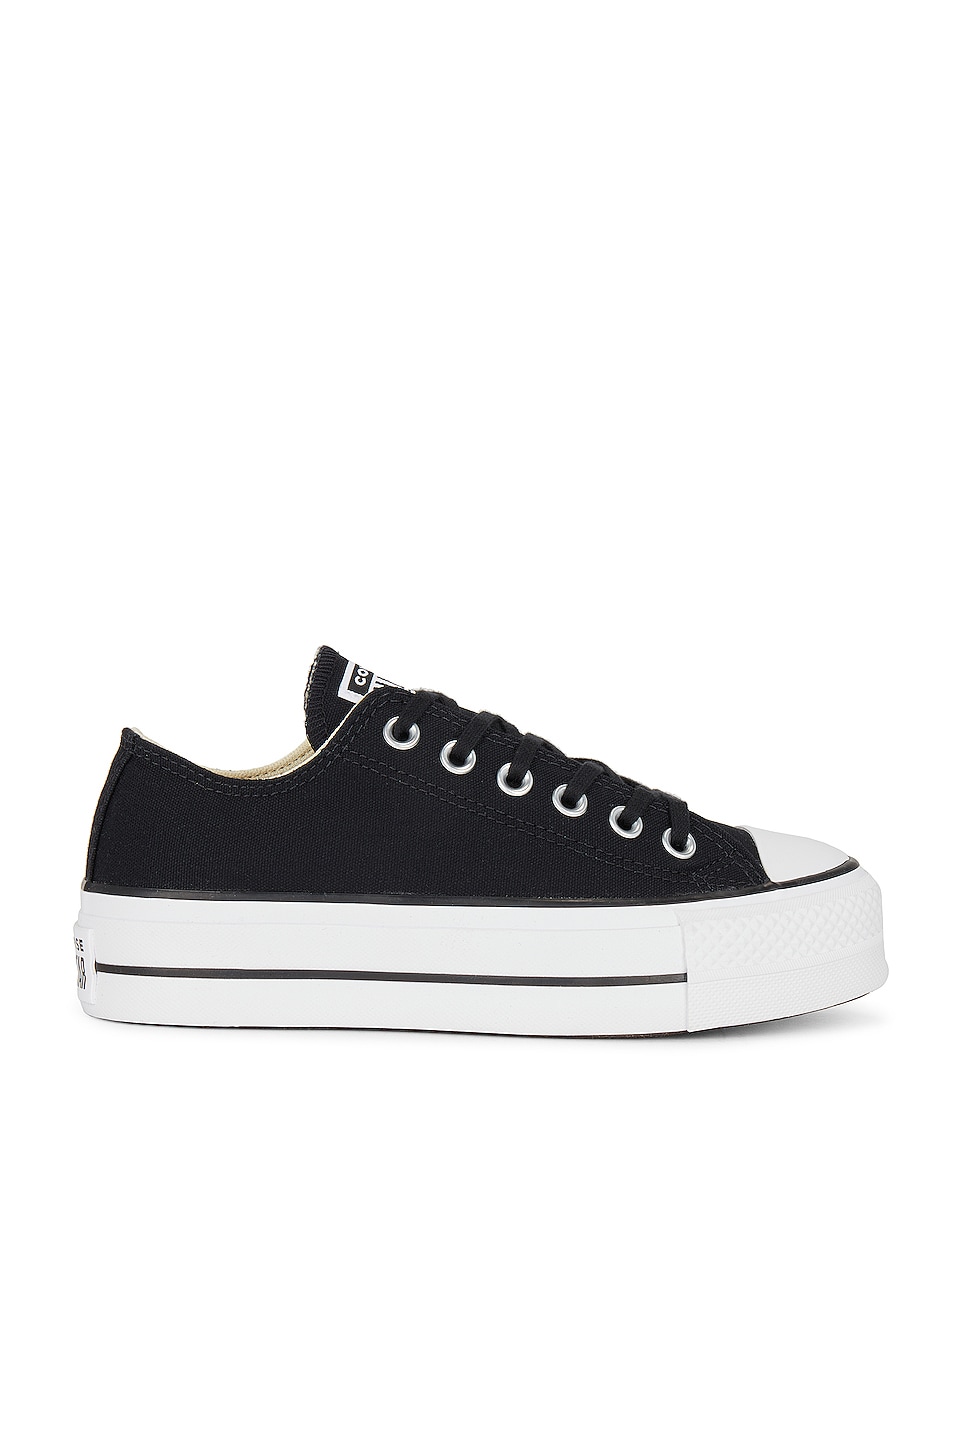 Converse Chuck Taylor All Star Canvas Platform Sneaker in Black & White |  REVOLVE